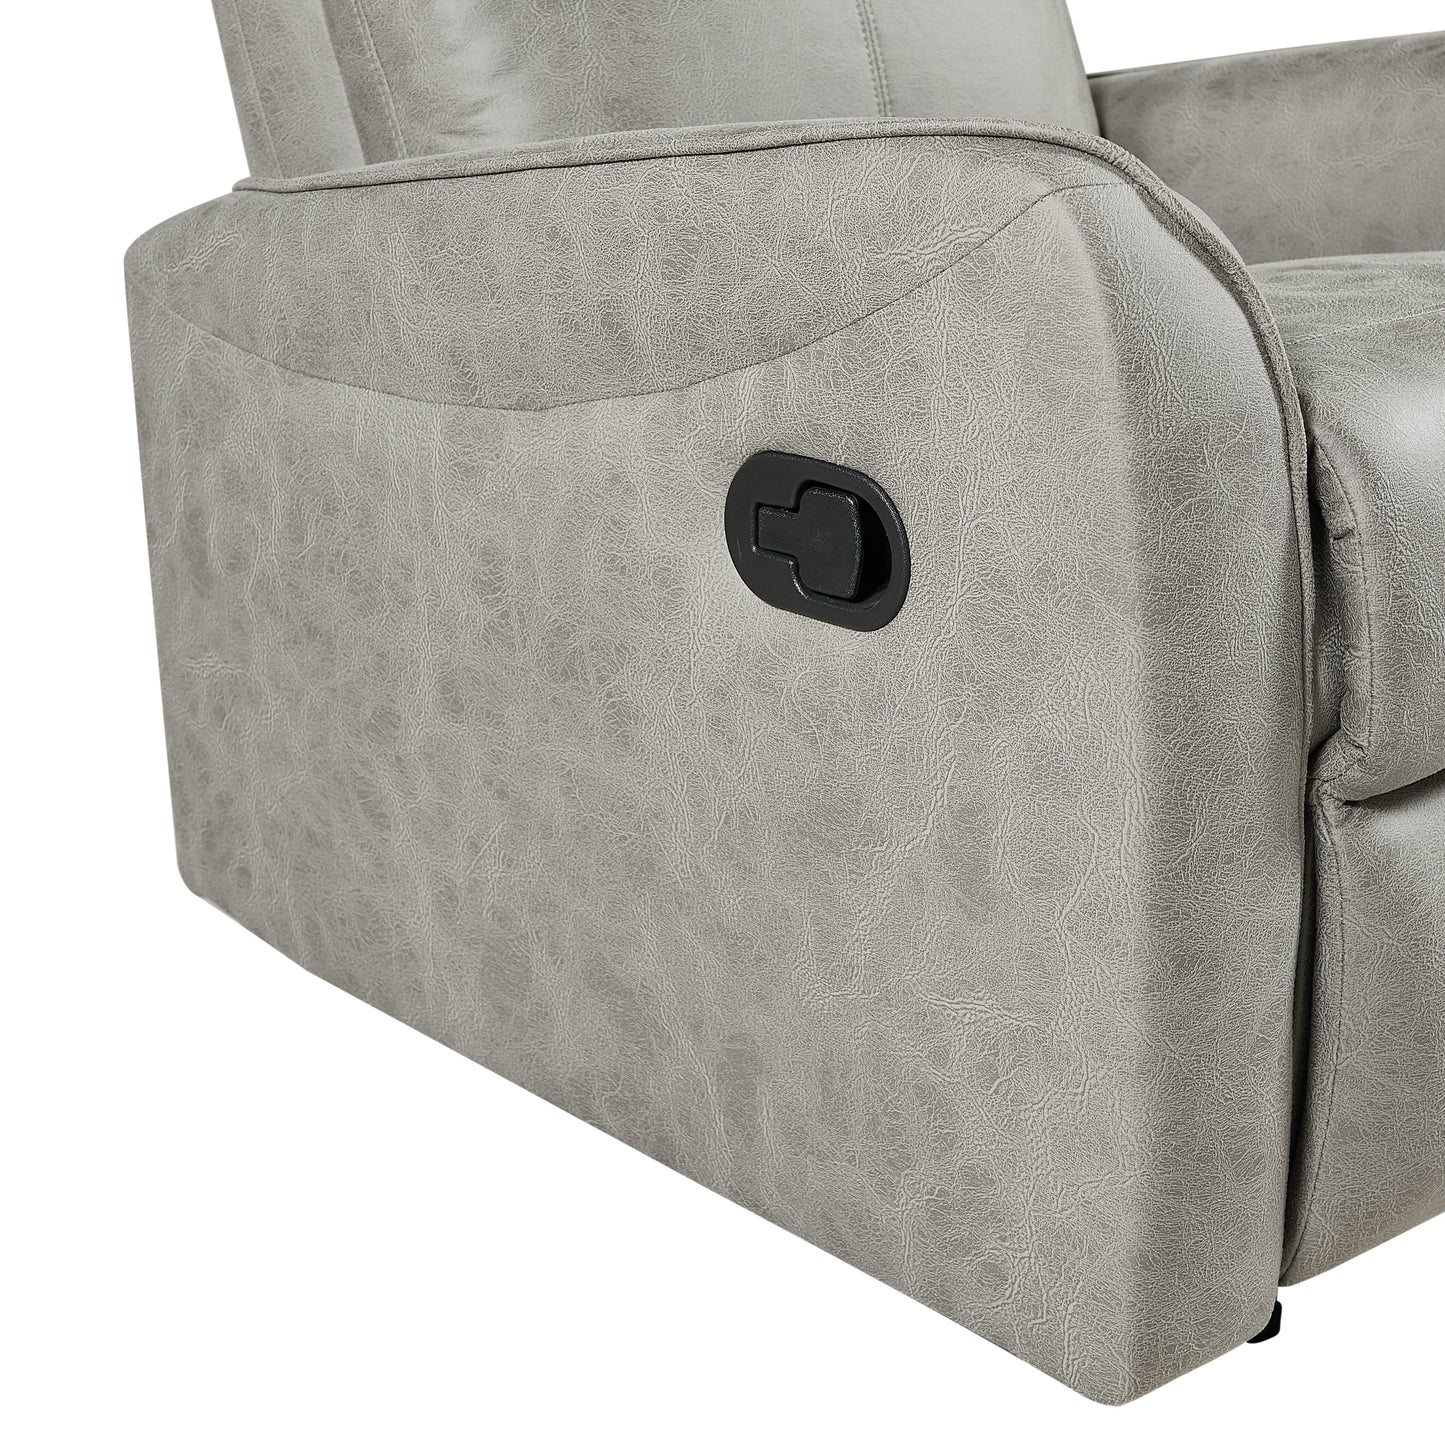 Sofa;armchair;Function sofa;Lie Function sofa;Lounge chair;Chaise chair;lie sofa;Leisure sofa;Rest sofa;